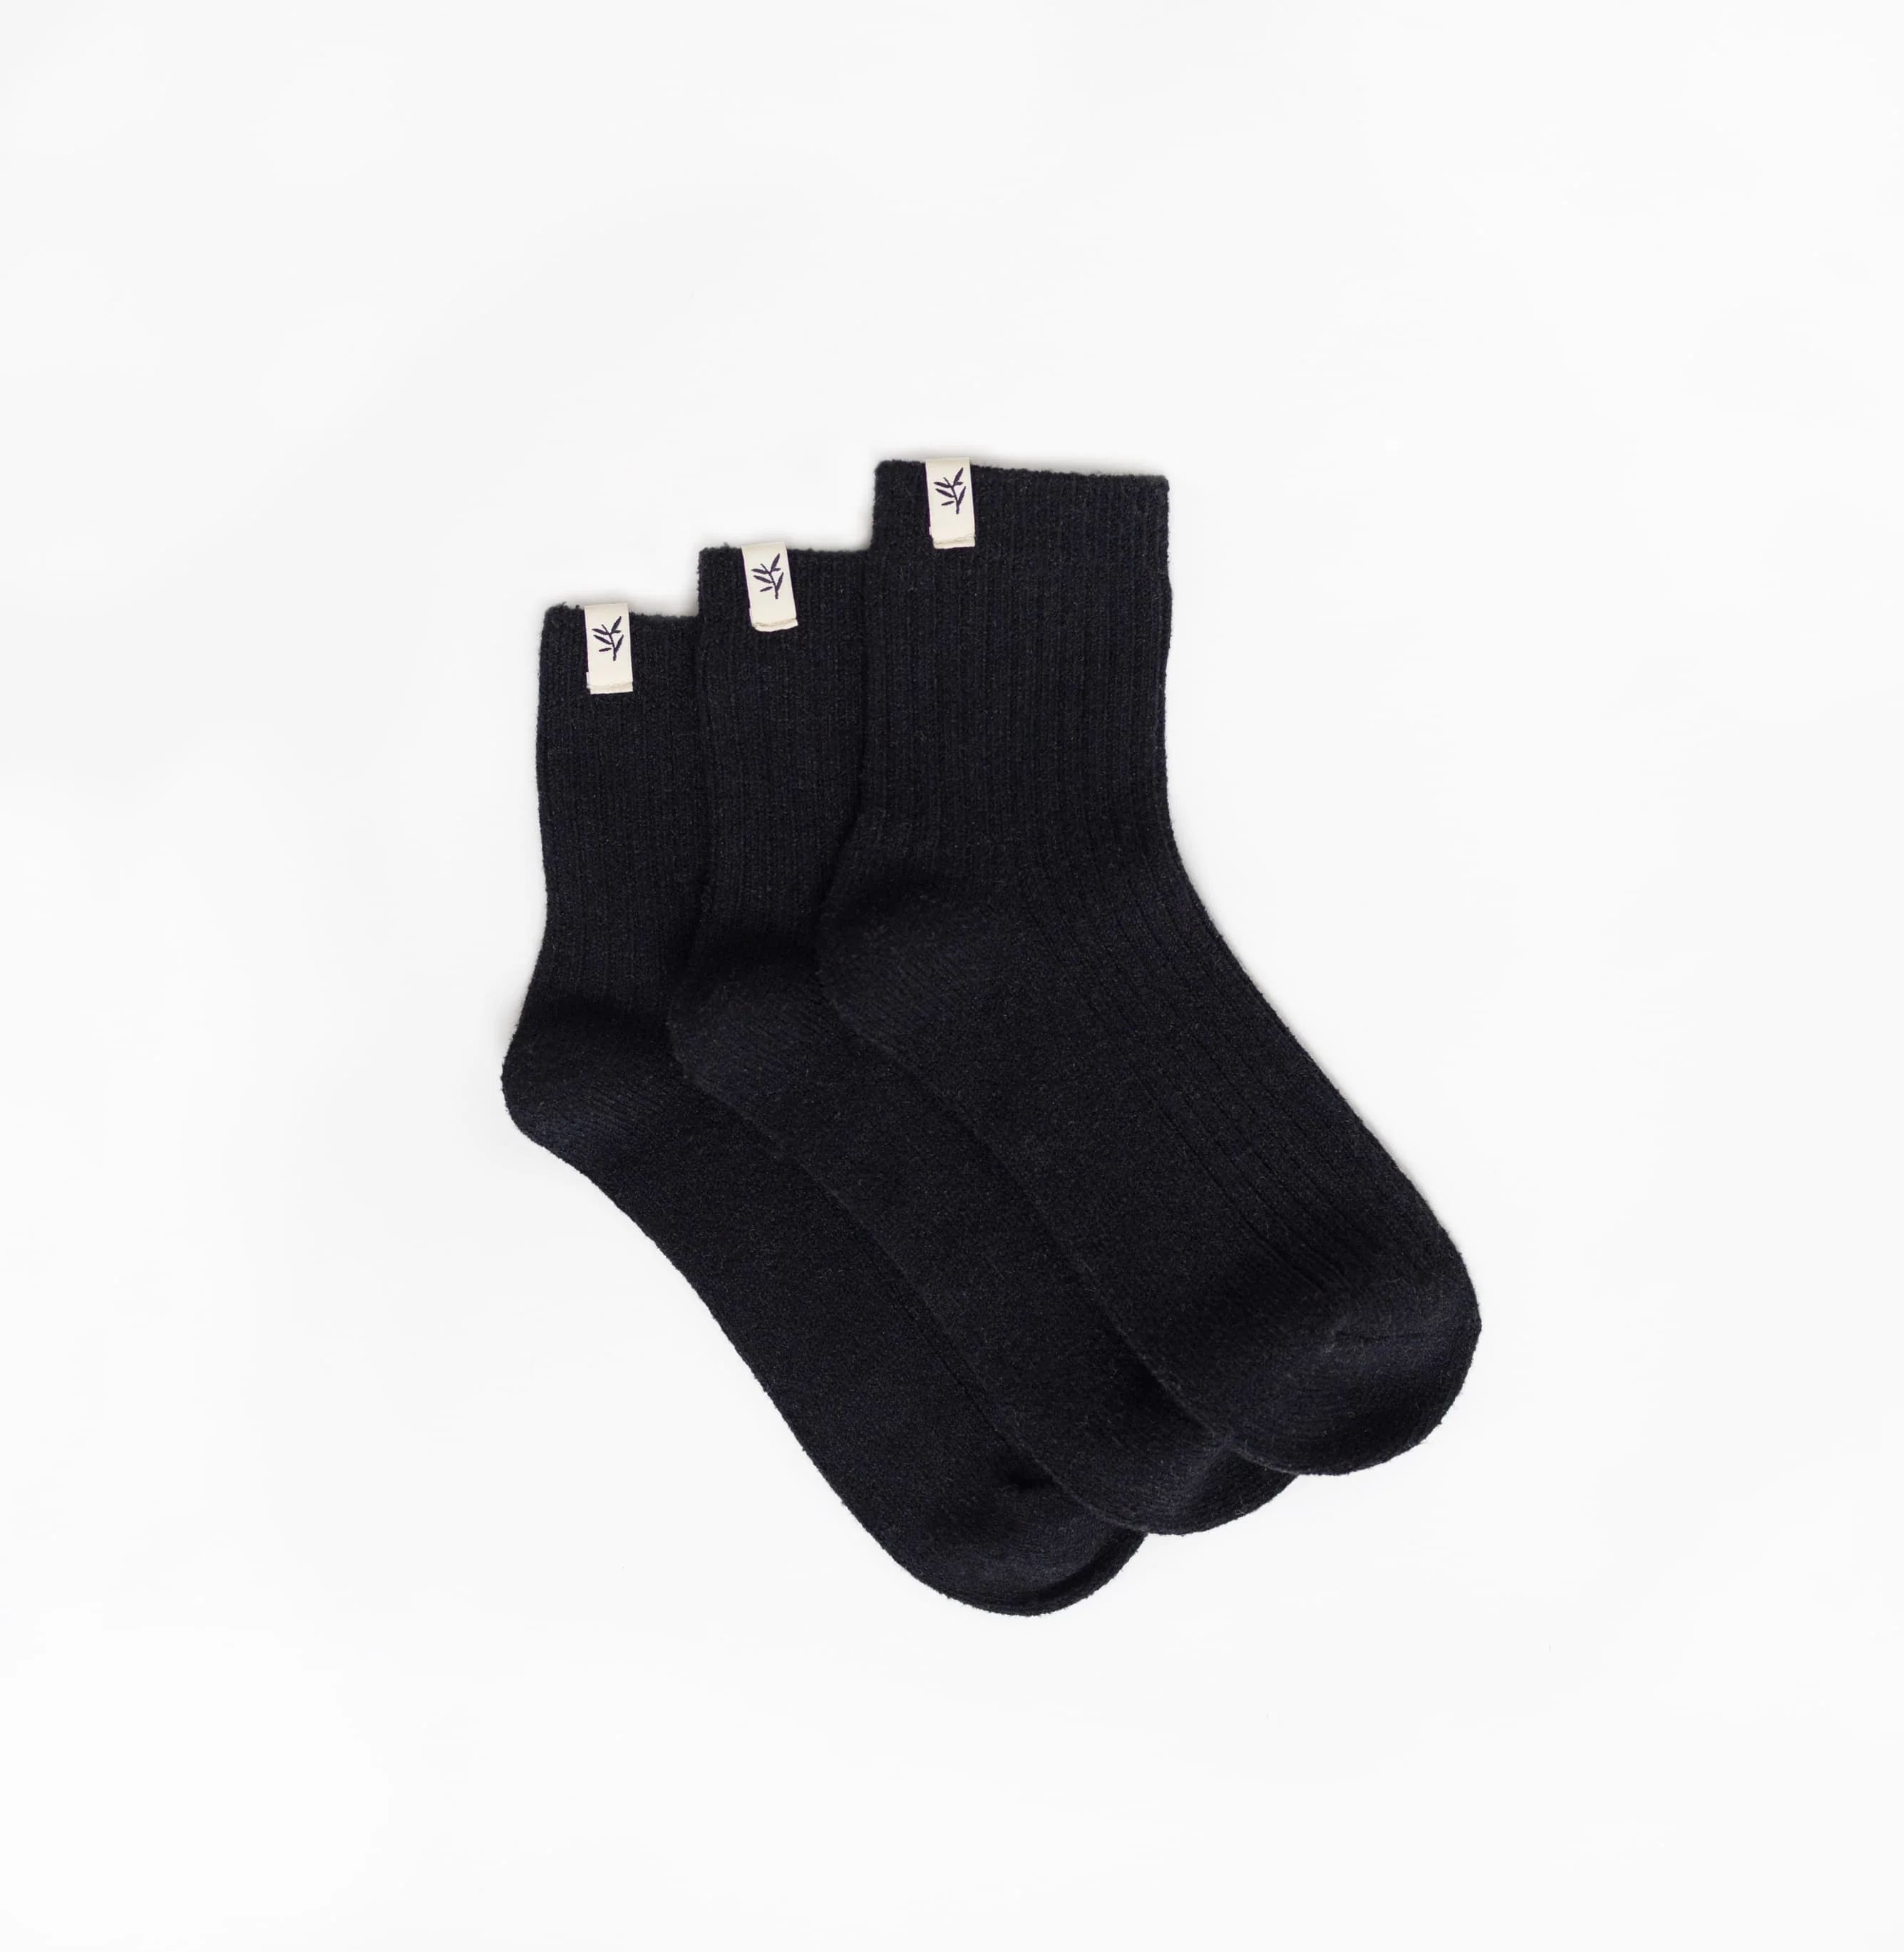 The Plush Modern Crew Socks in Black (Size: Women's) - Cozy Earth | Cozy Earth